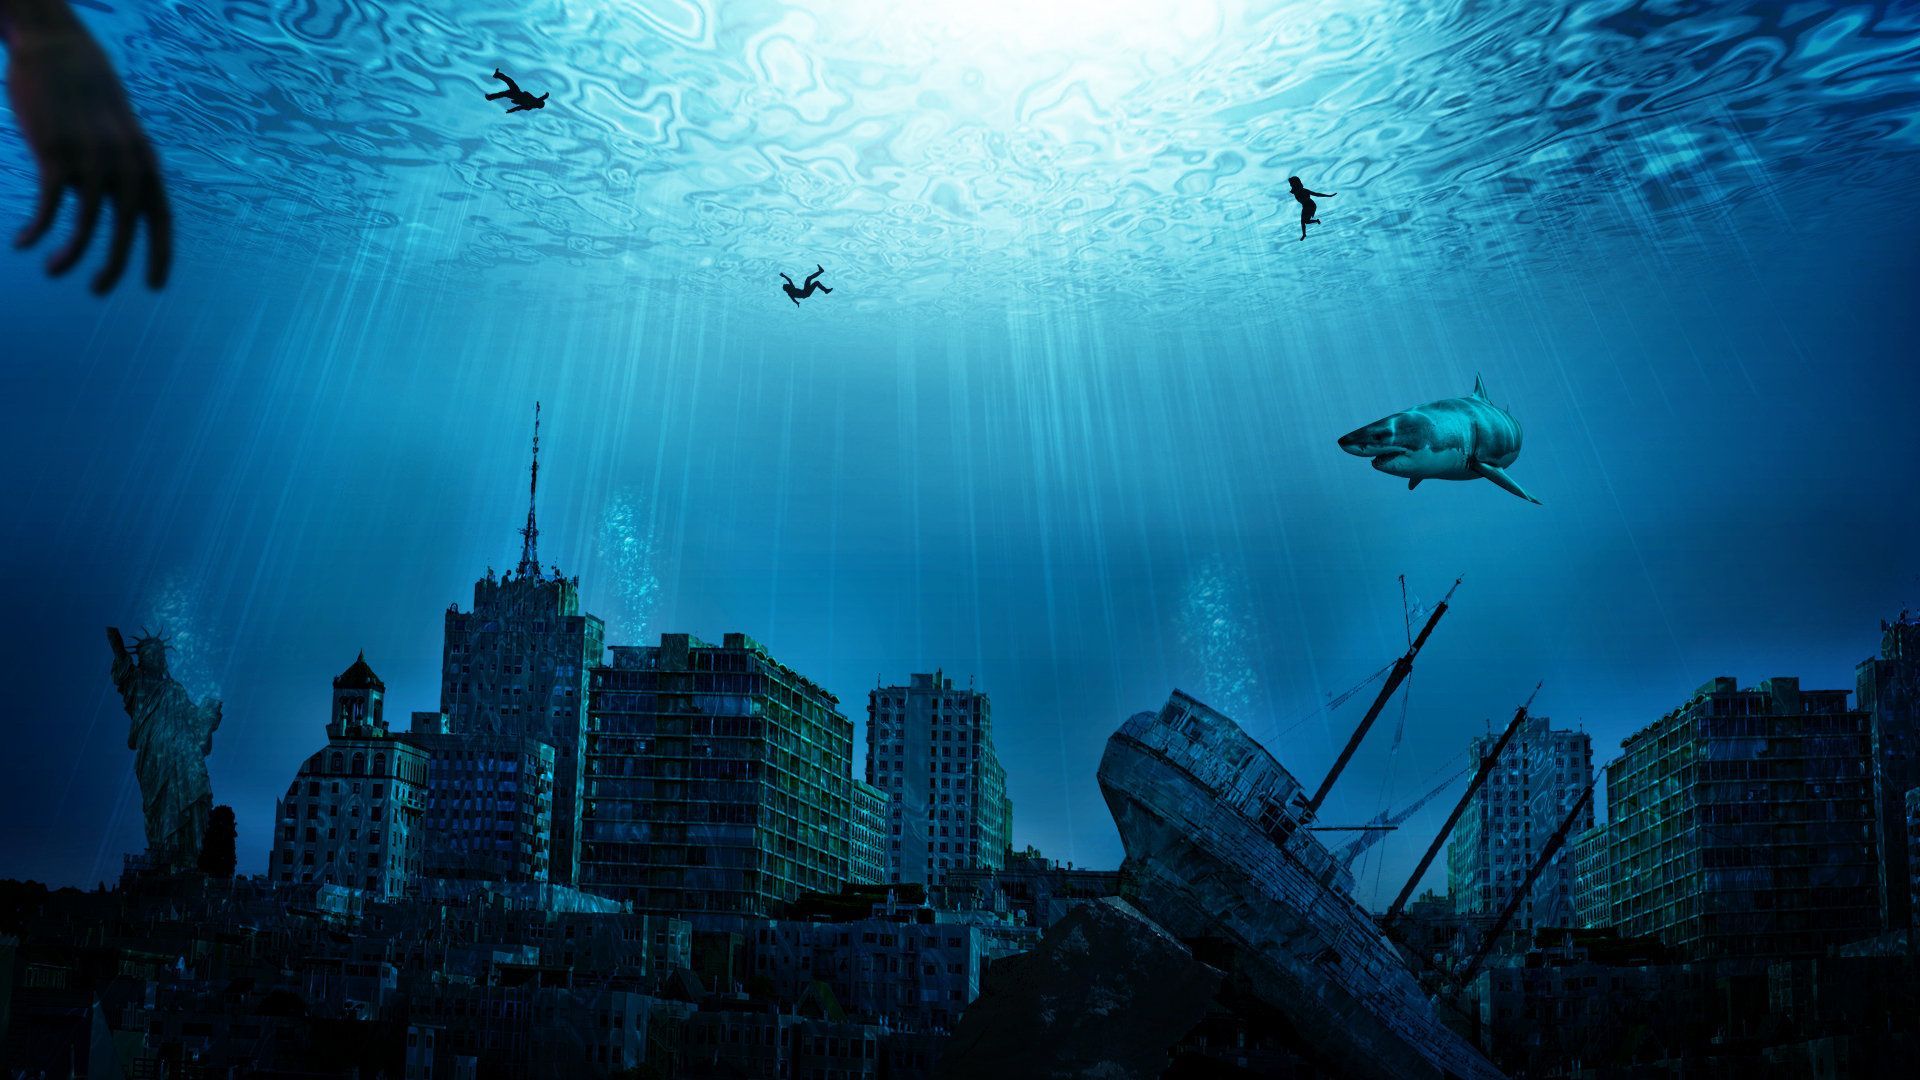 Underwater City Wallpaper HD By Samuels Graphics. Underwater City, City Wallpaper, Underwater